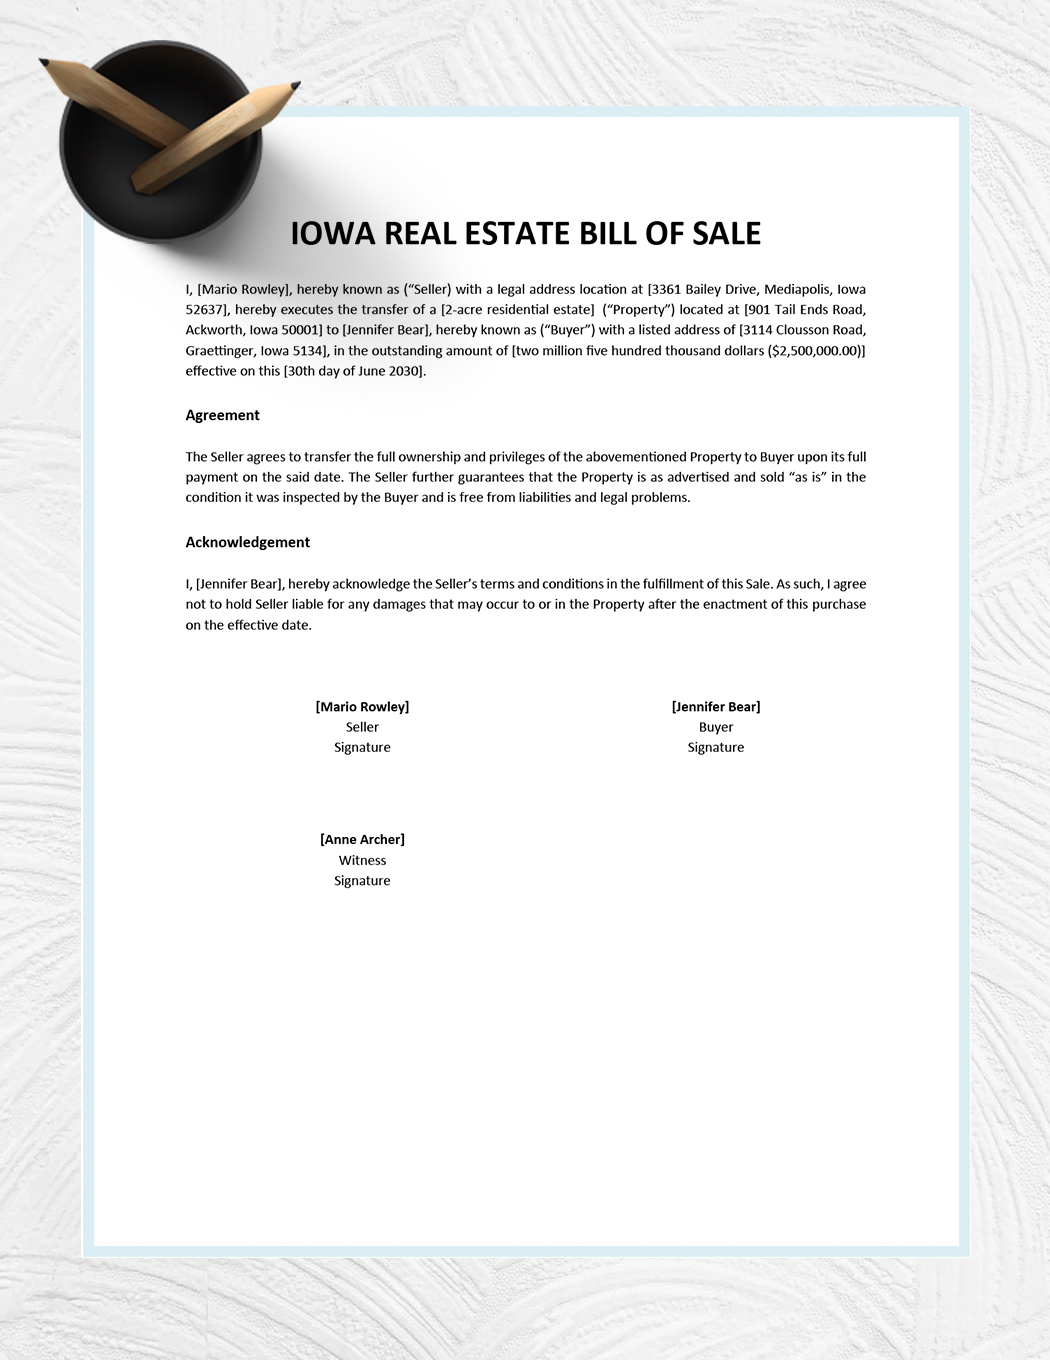 Iowa Real Estate Bill of Sale Template